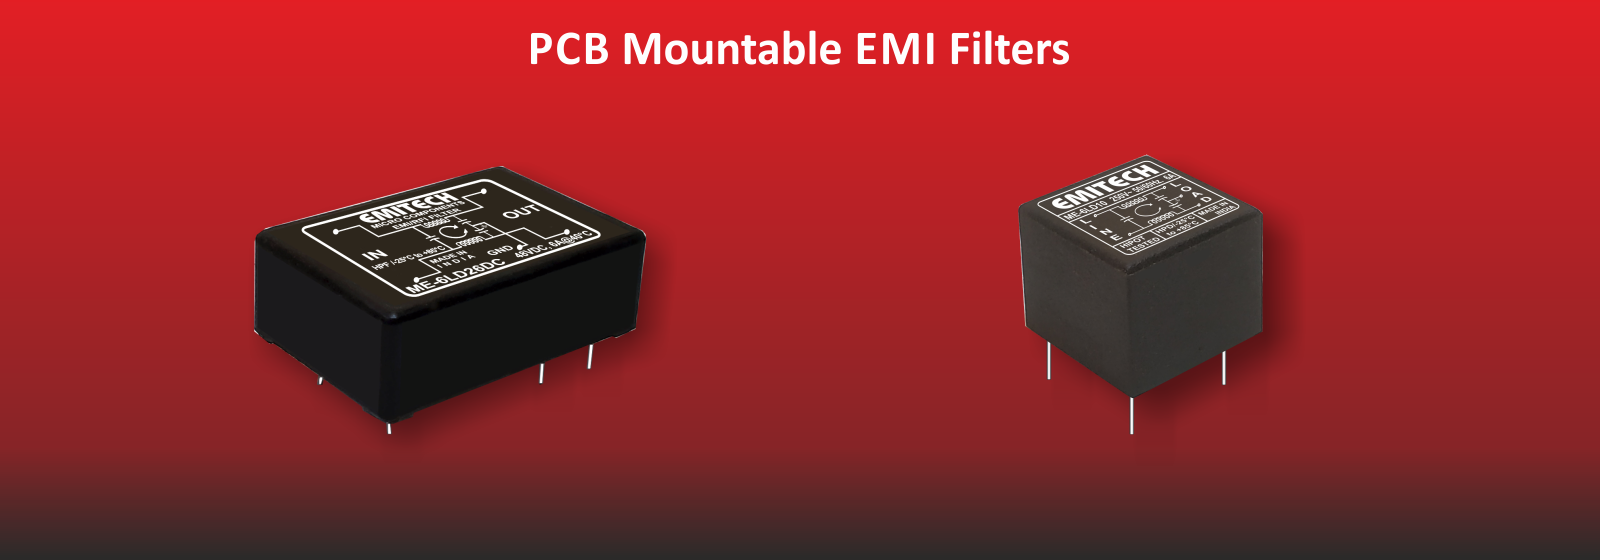 PCB Mount EMI Filter